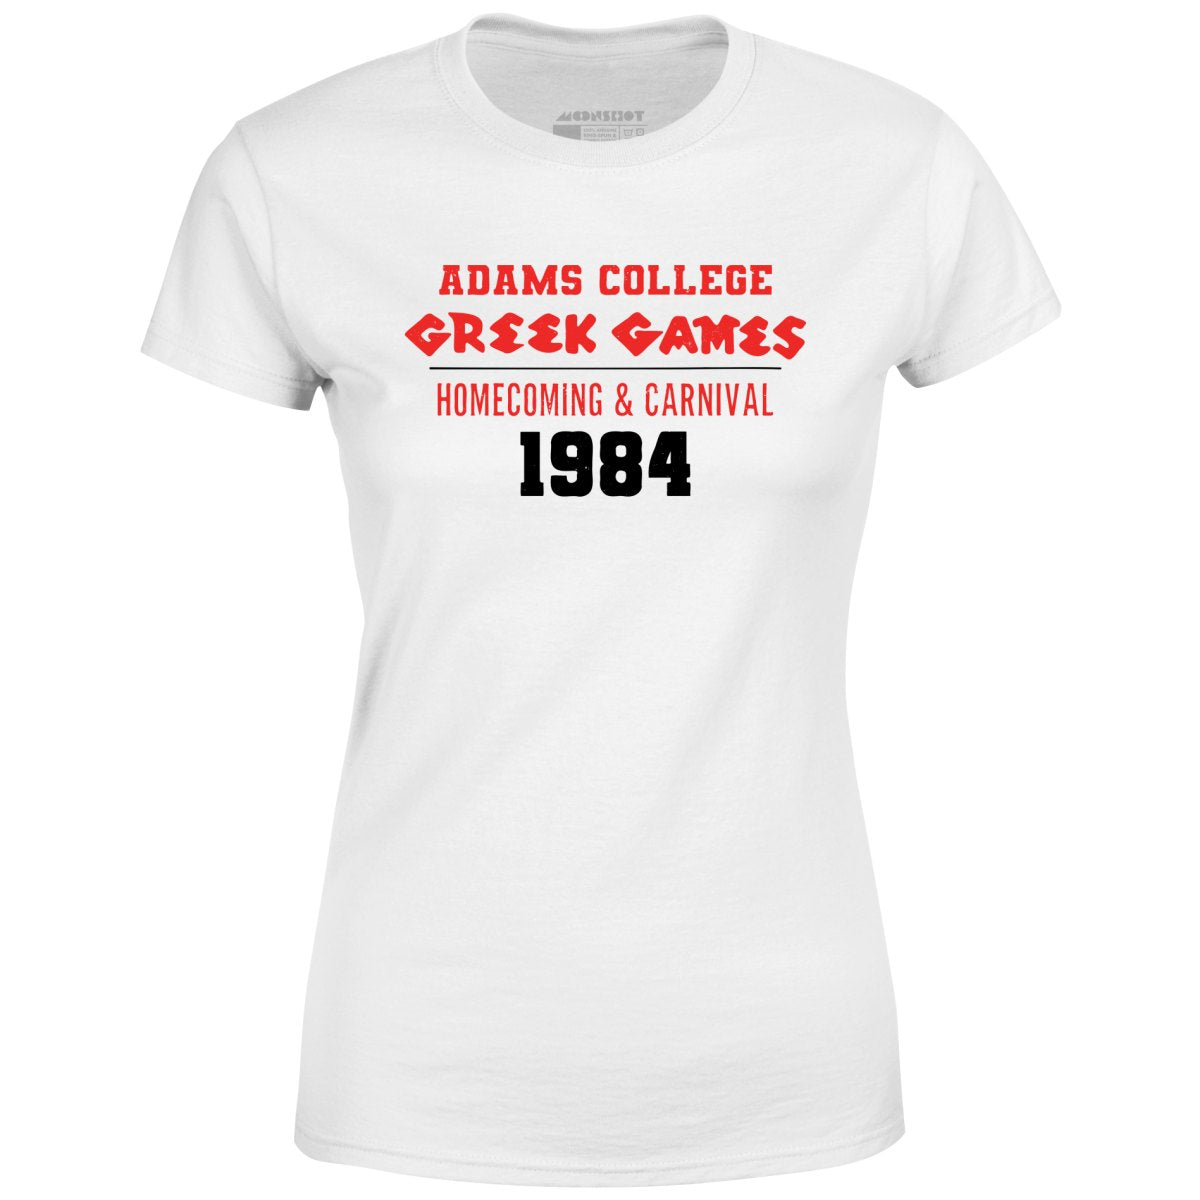 Adams College Greek Games 1984 - Women's T-Shirt